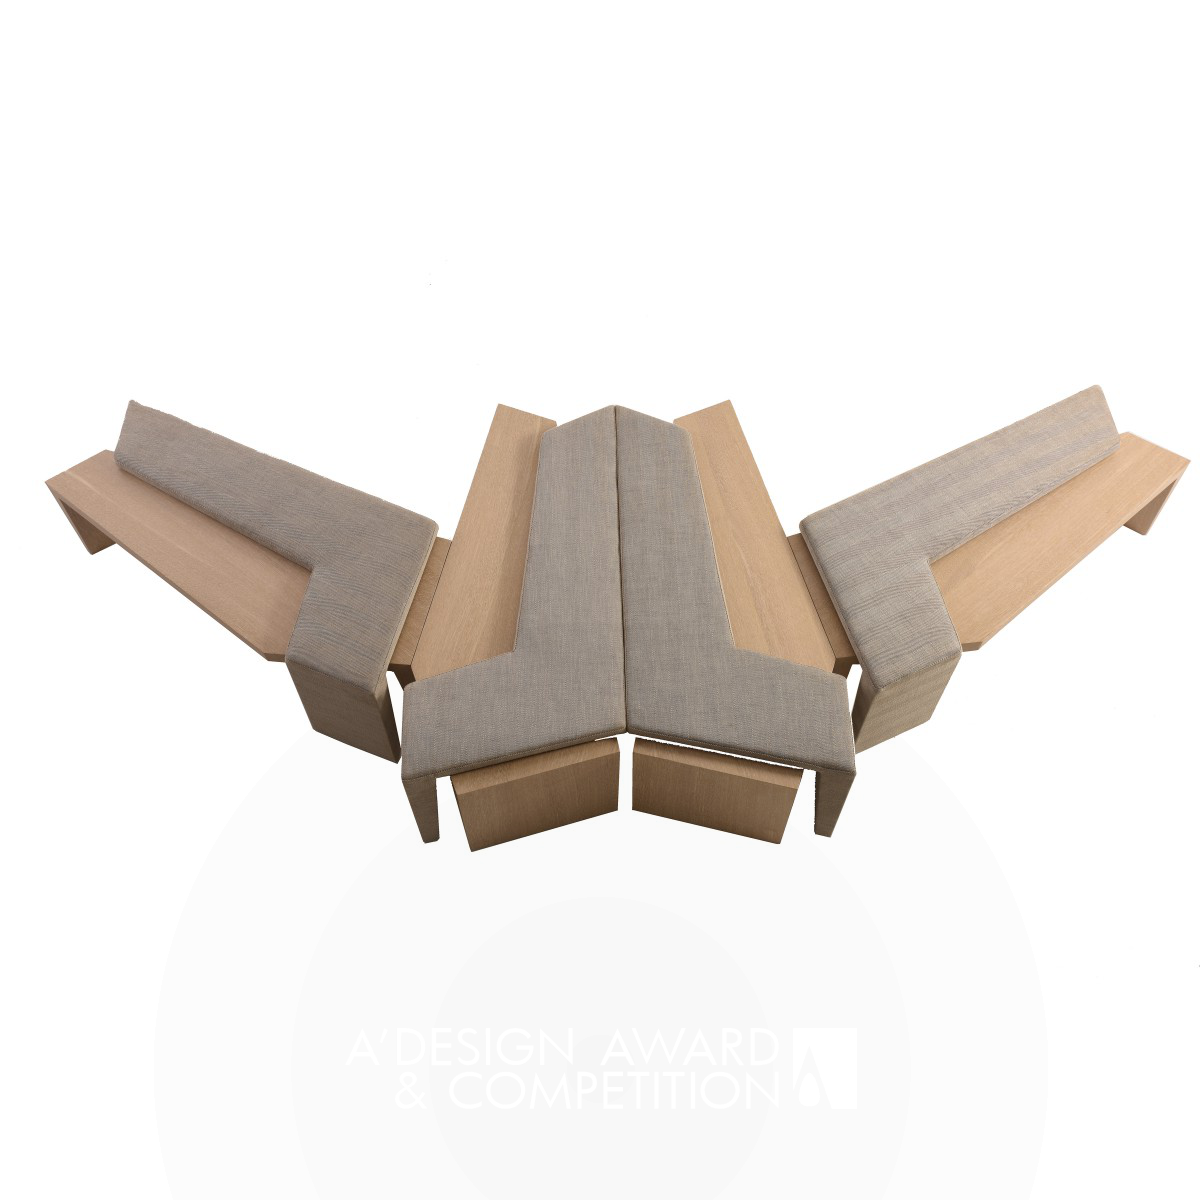 Tangram Stool by Kris Lin Iron Furniture Design Award Winner 2018 